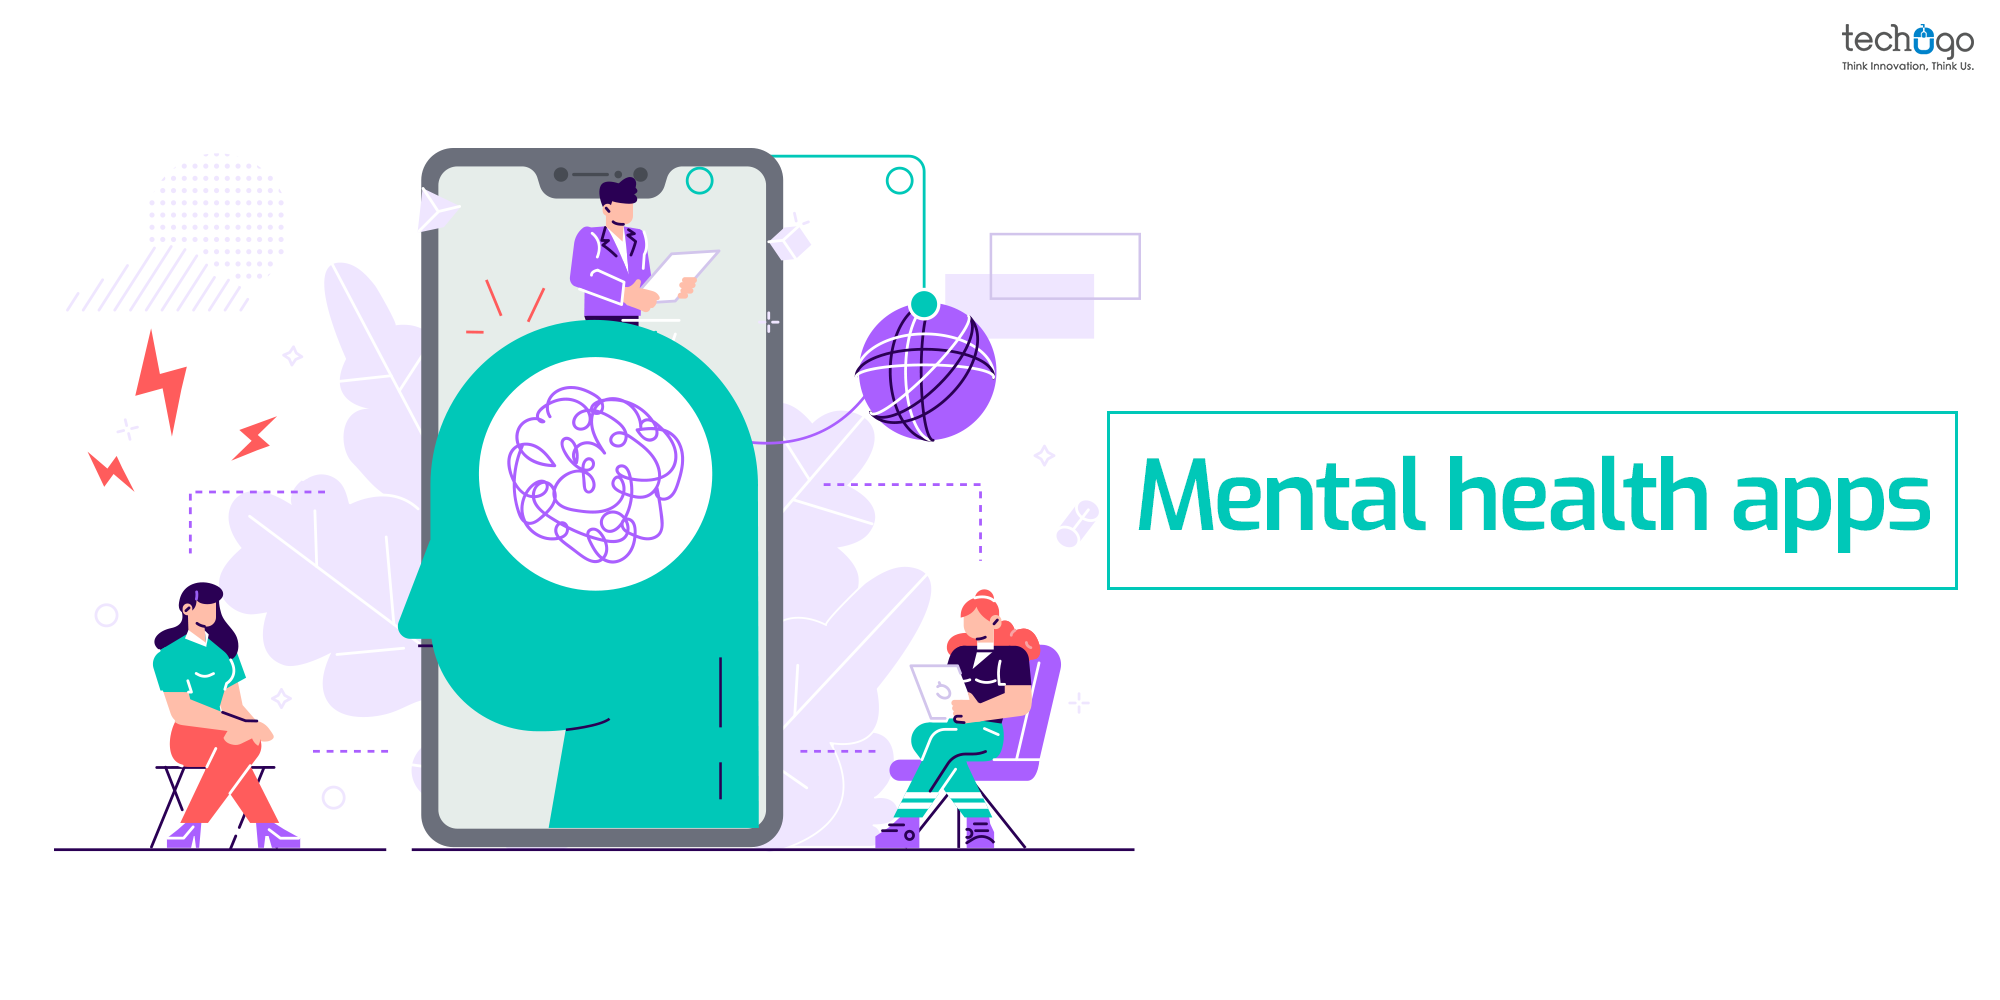 Mental health apps